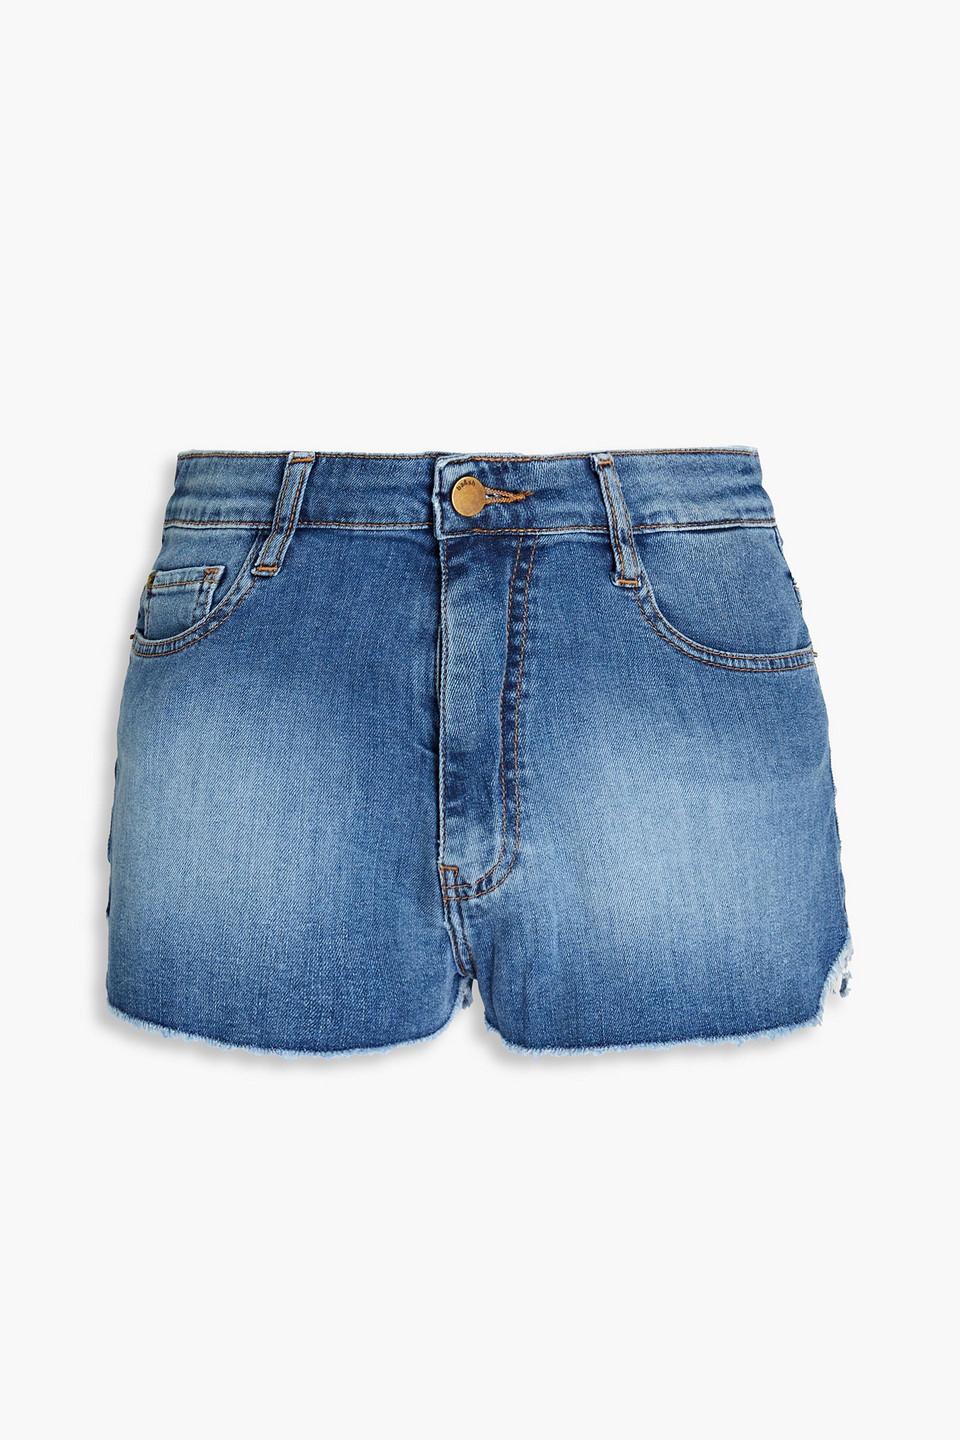 Ba&sh Faded Denim Shorts in Blue | Lyst UK